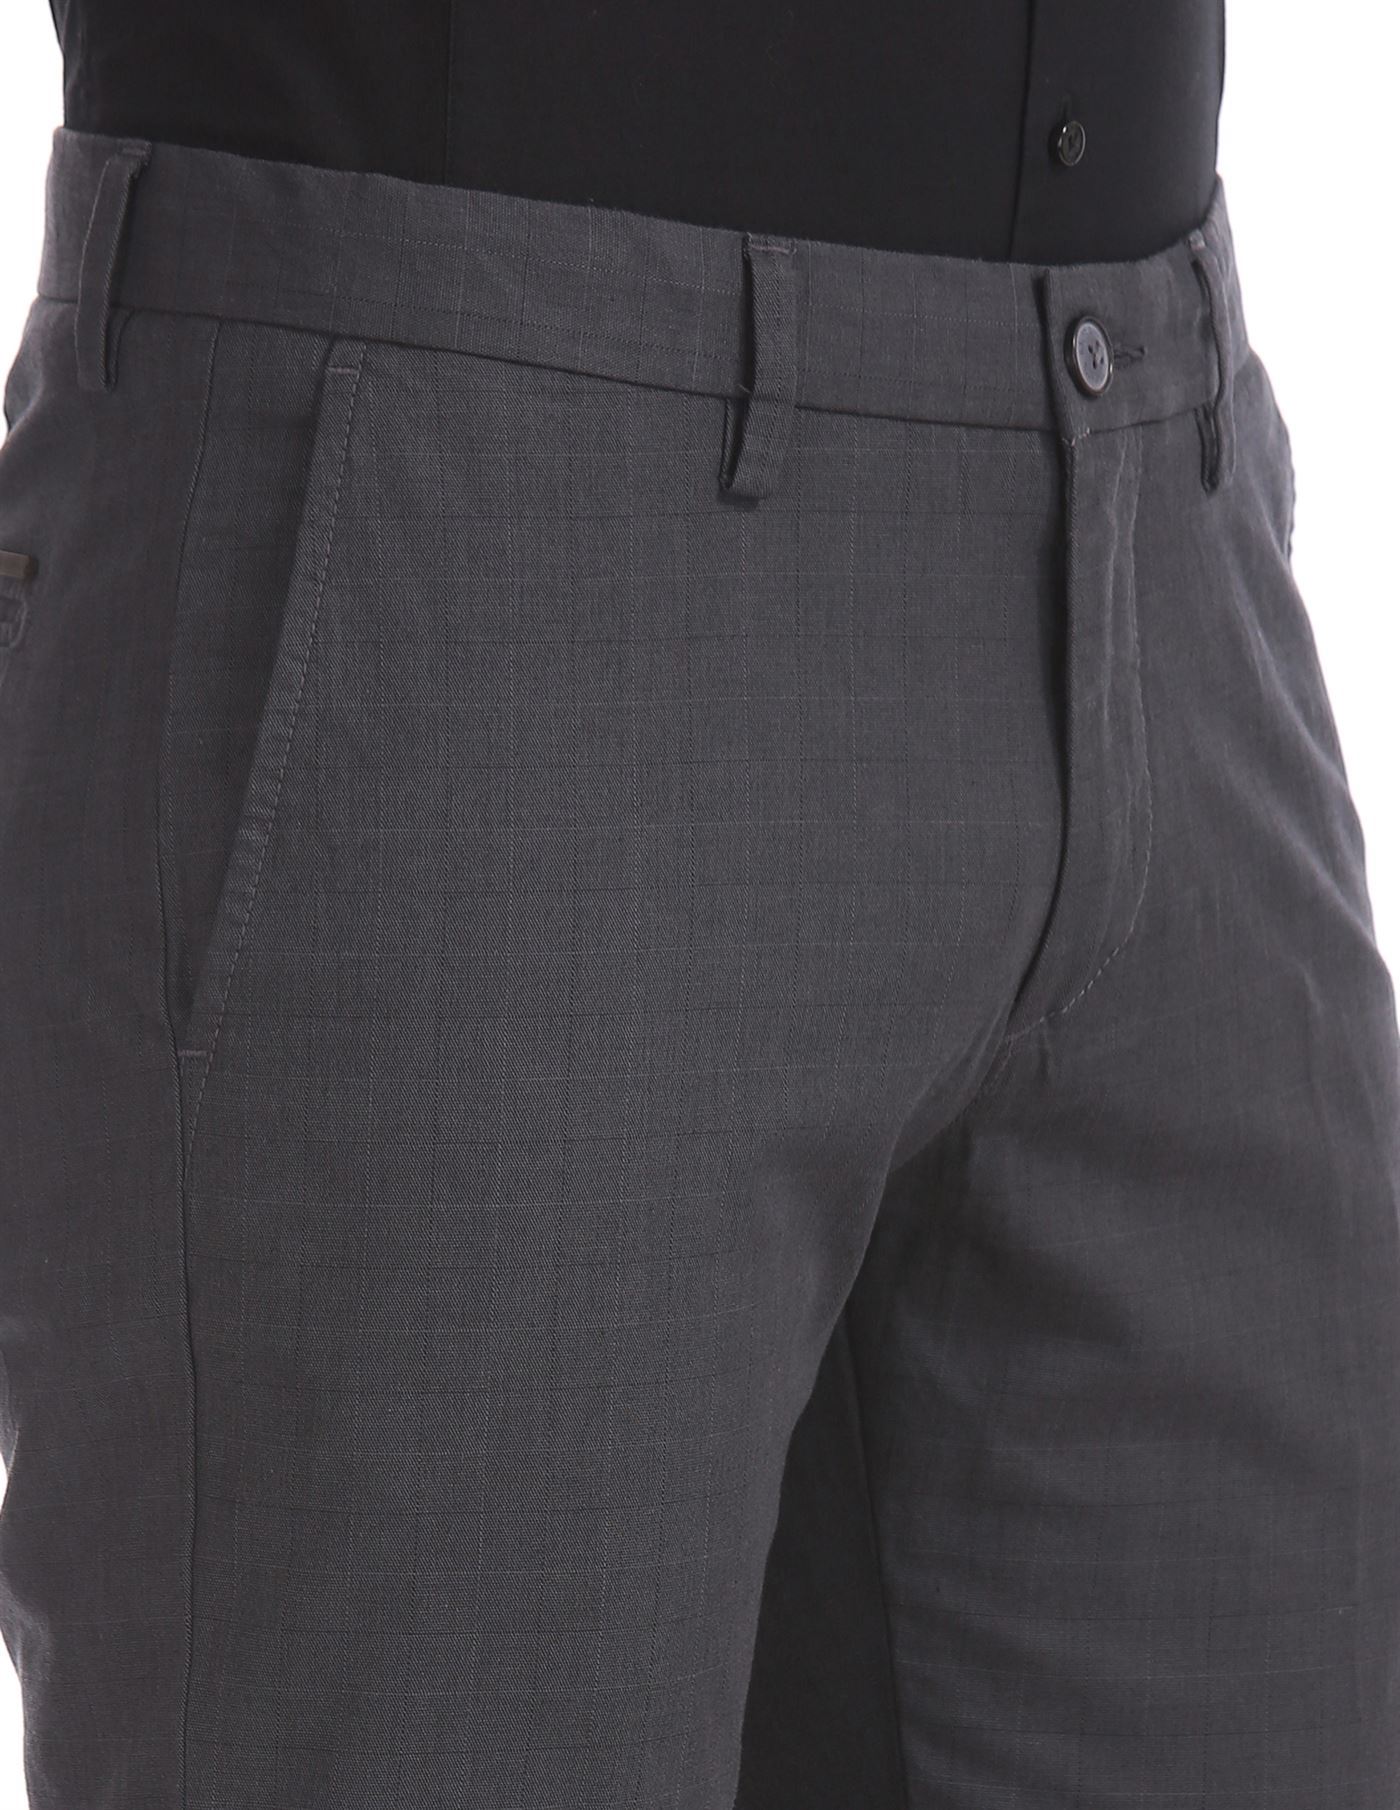 U.S.Polo Assn. Men Casual Wear Dark Grey Trouser